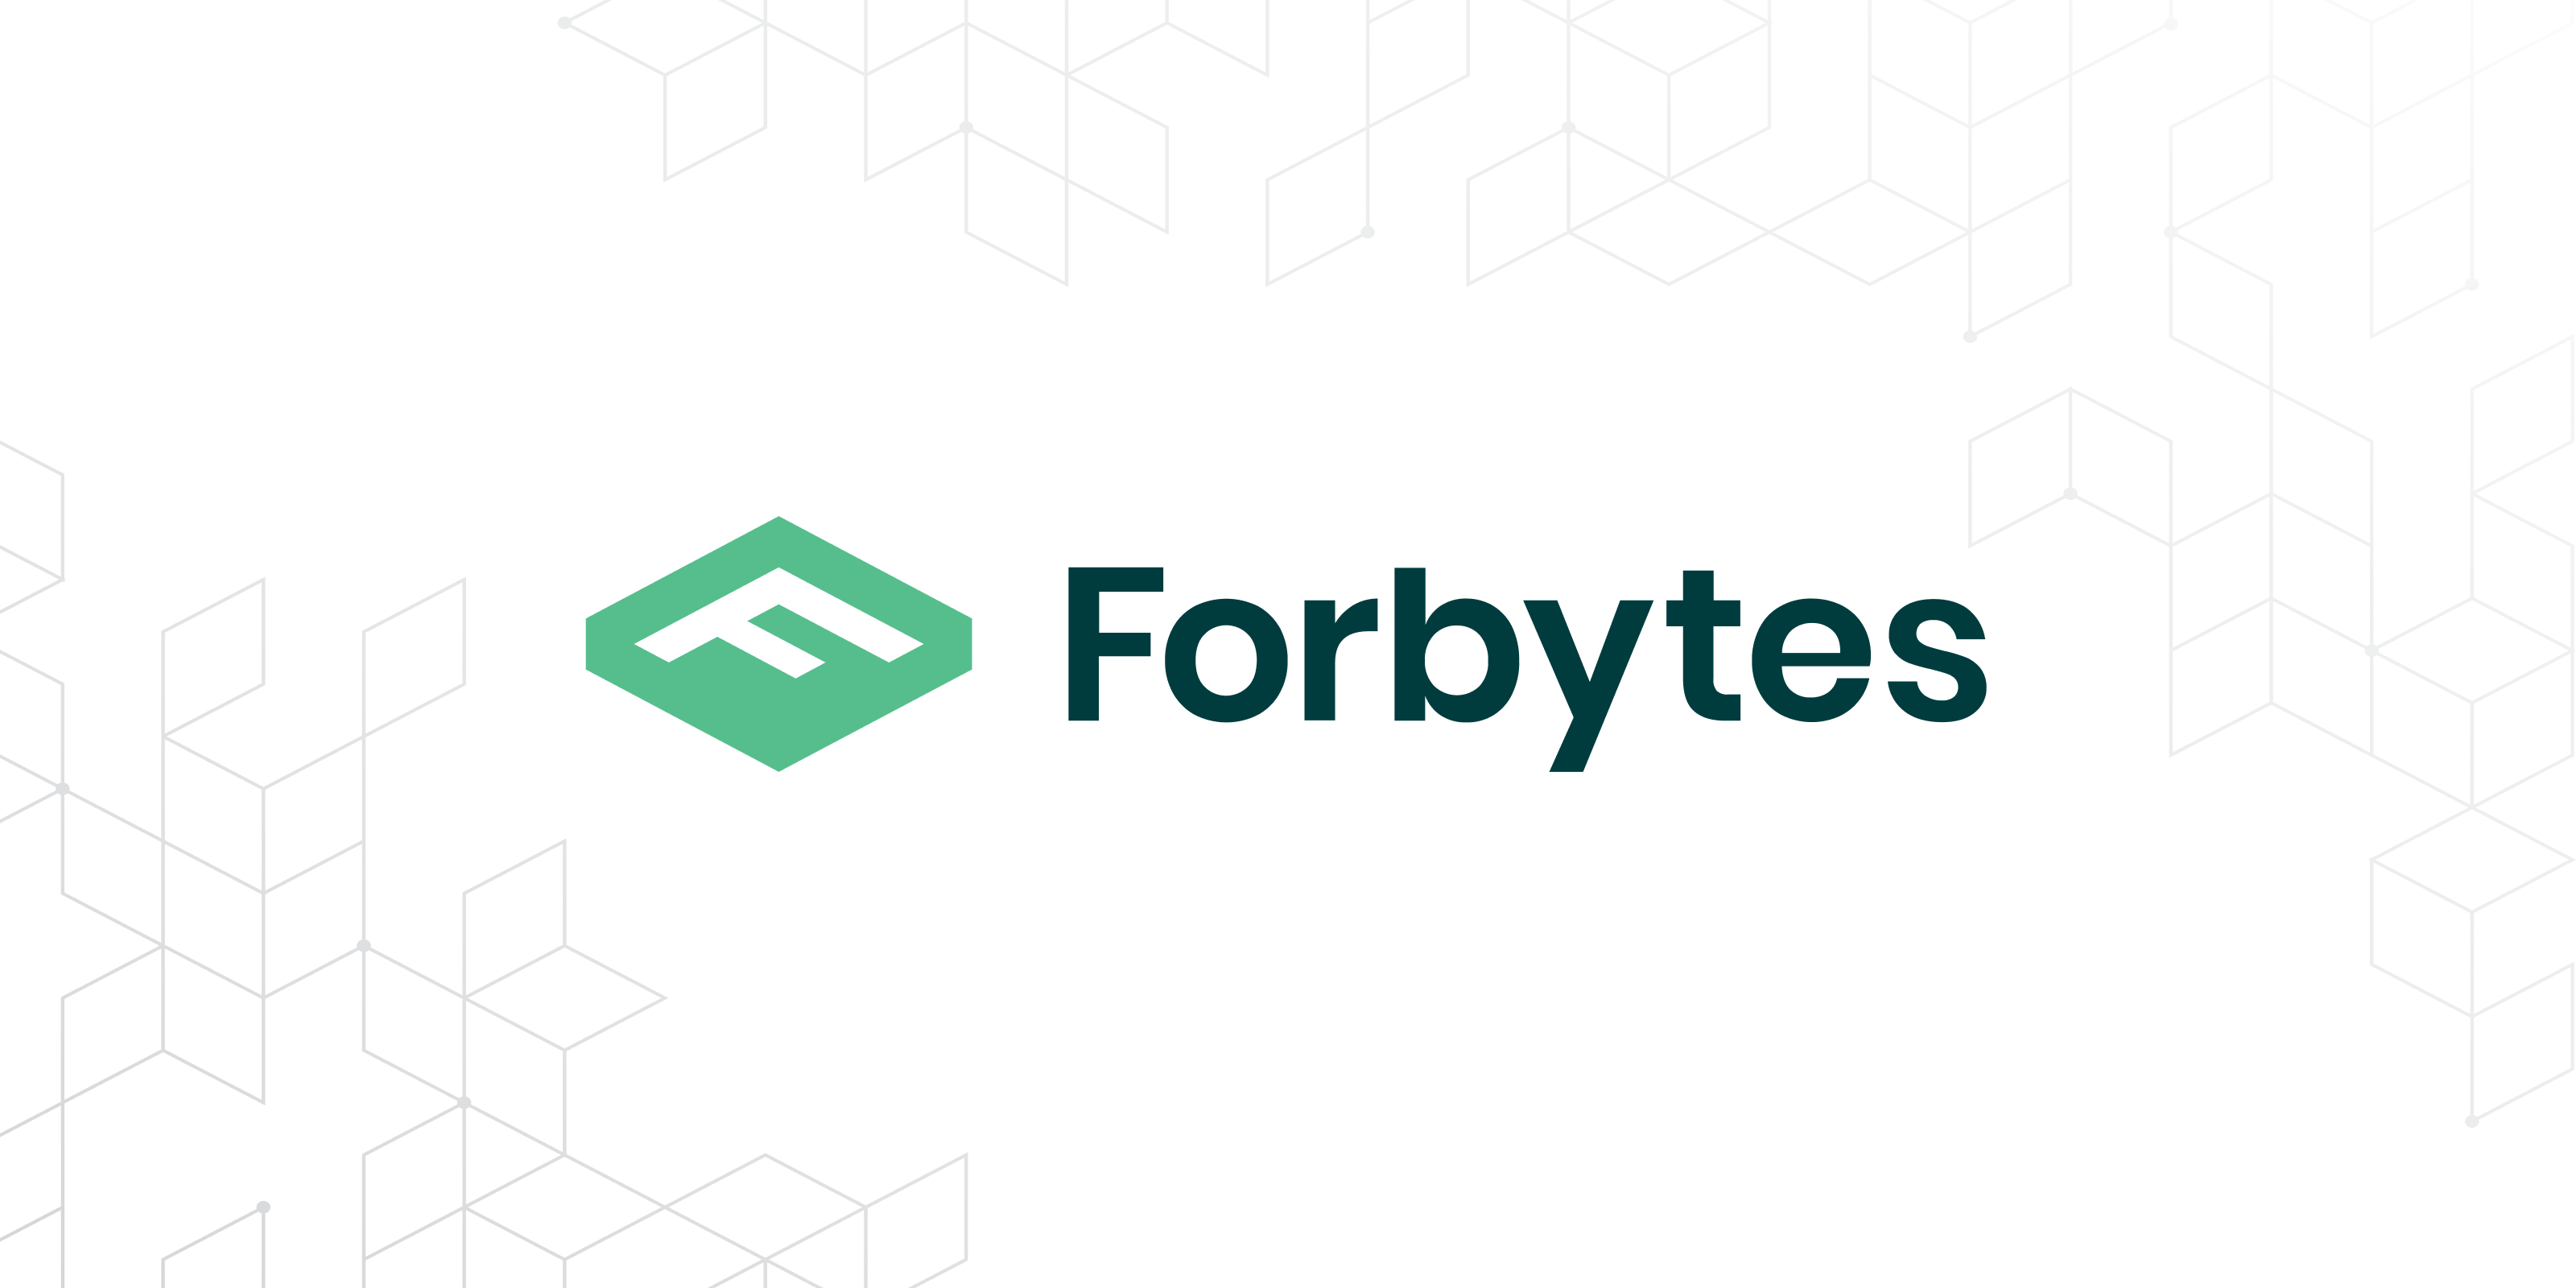 Forbytes' logo